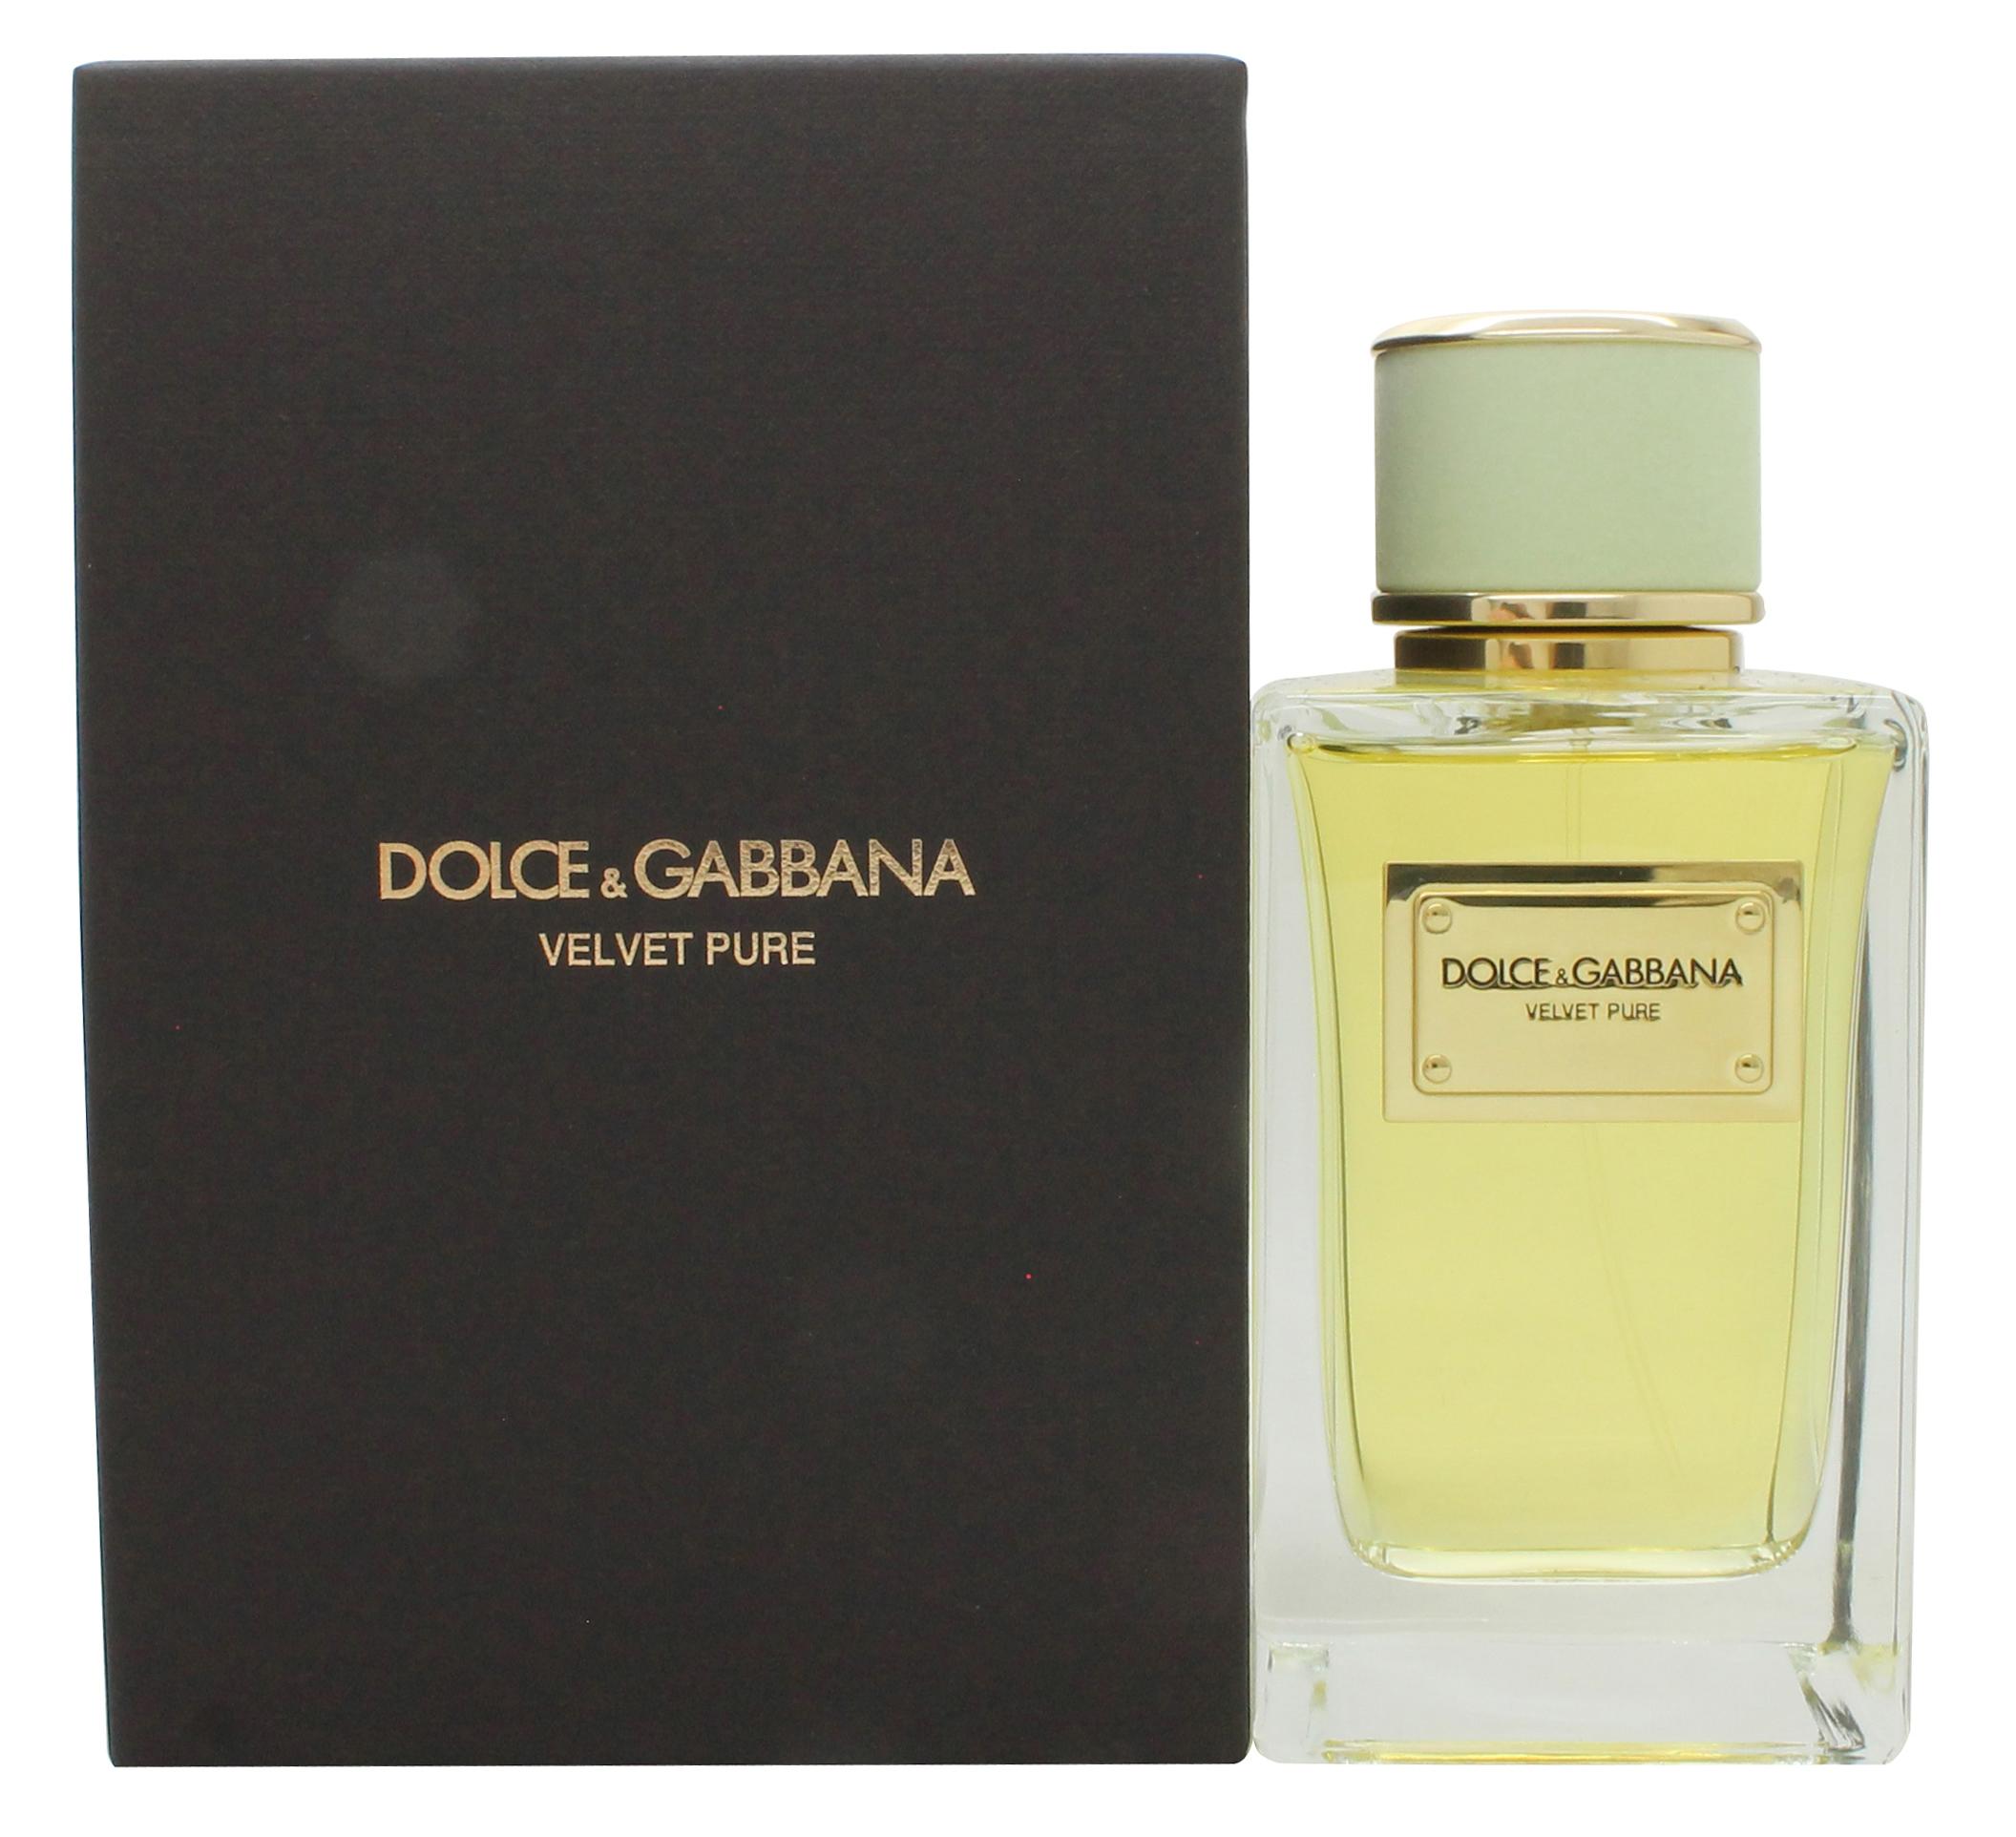 Dolce & Gabbana Velvet Pure Eau de Parfum 150ml Spray